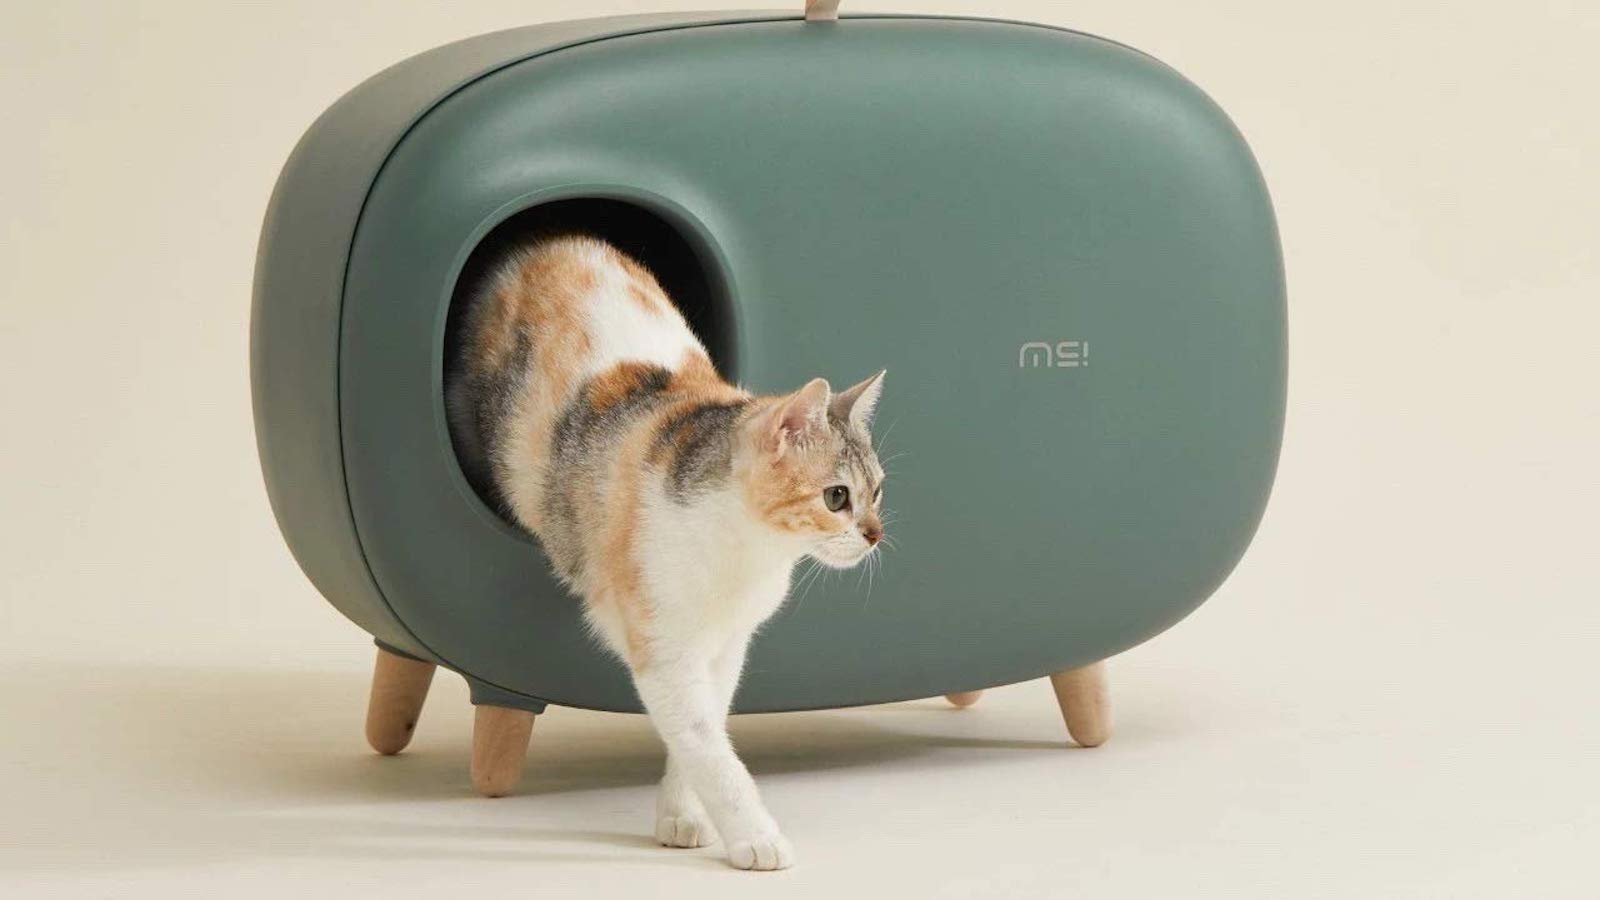 Makesure Modern Cat Litter Box keeps all your kitty’s bathroom supplies organized